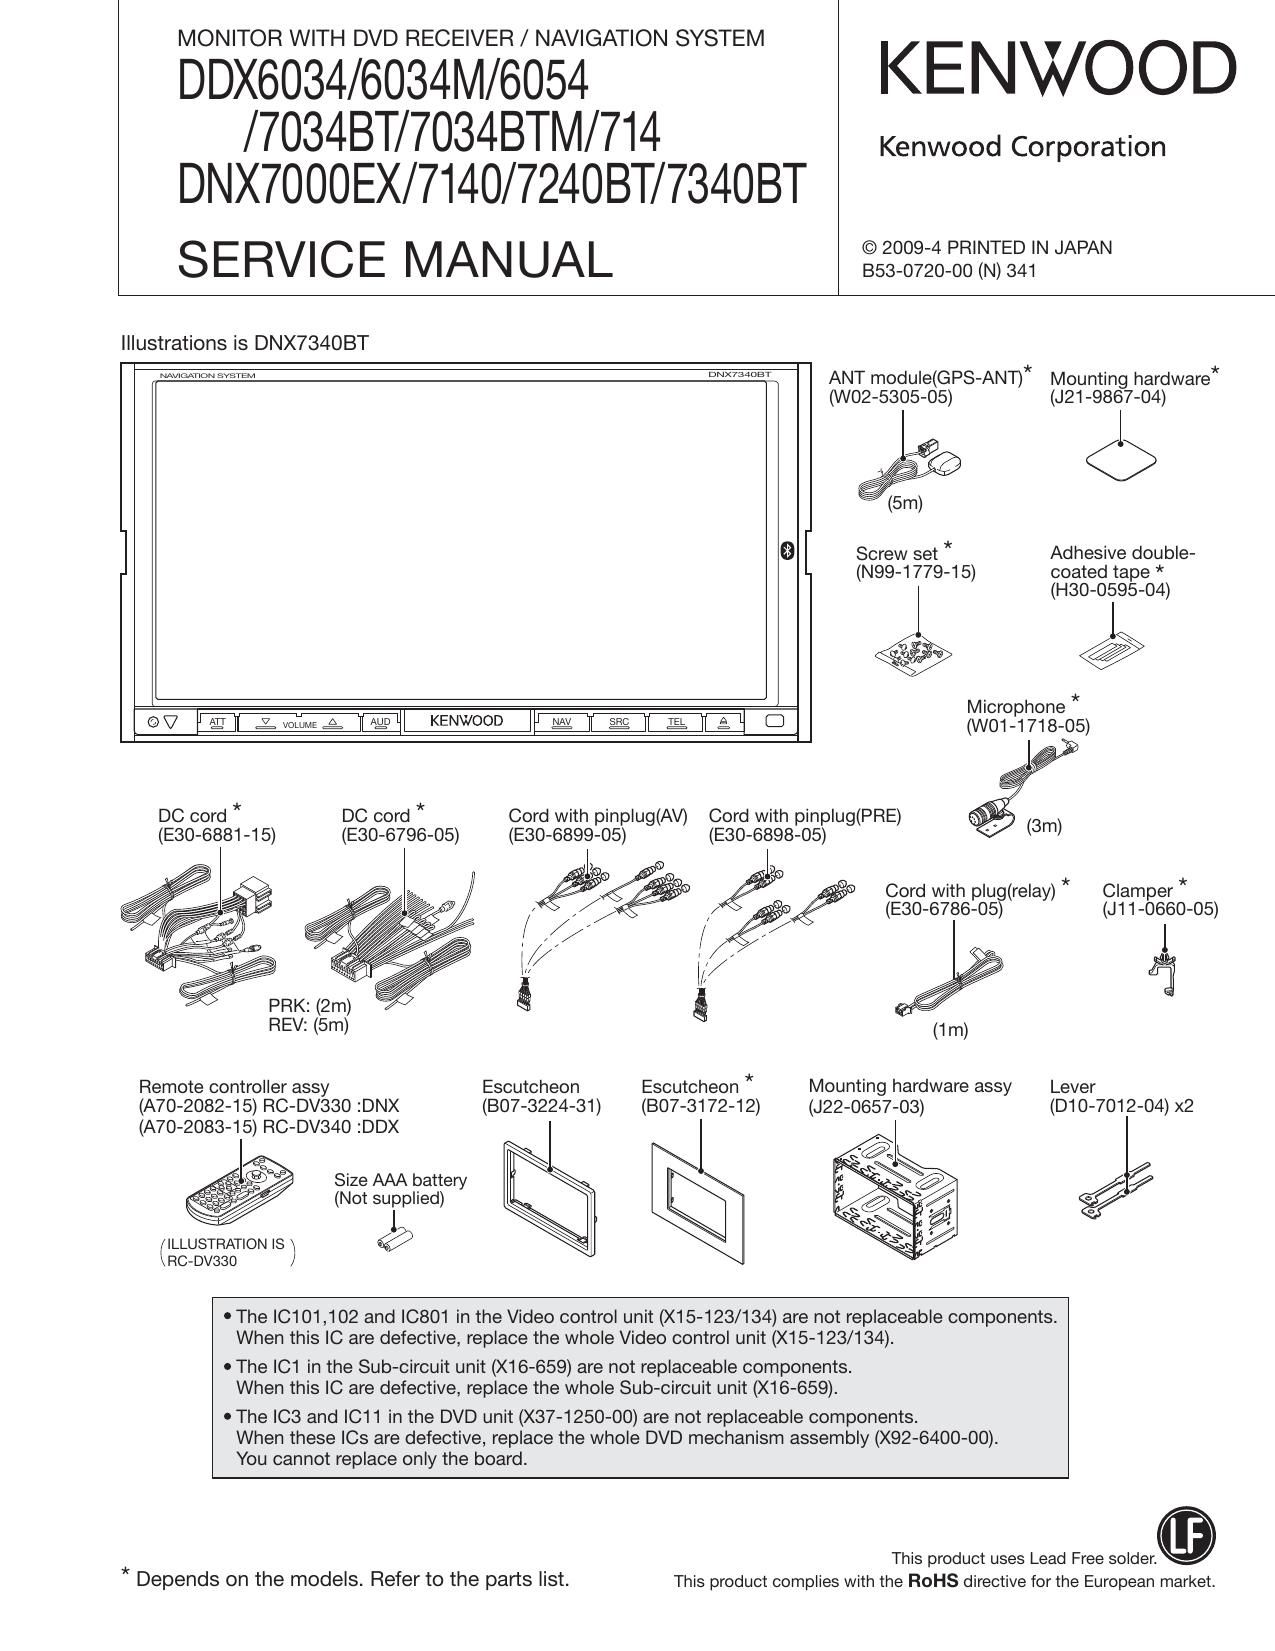 Kenwood DDX 714 HU Service Manual